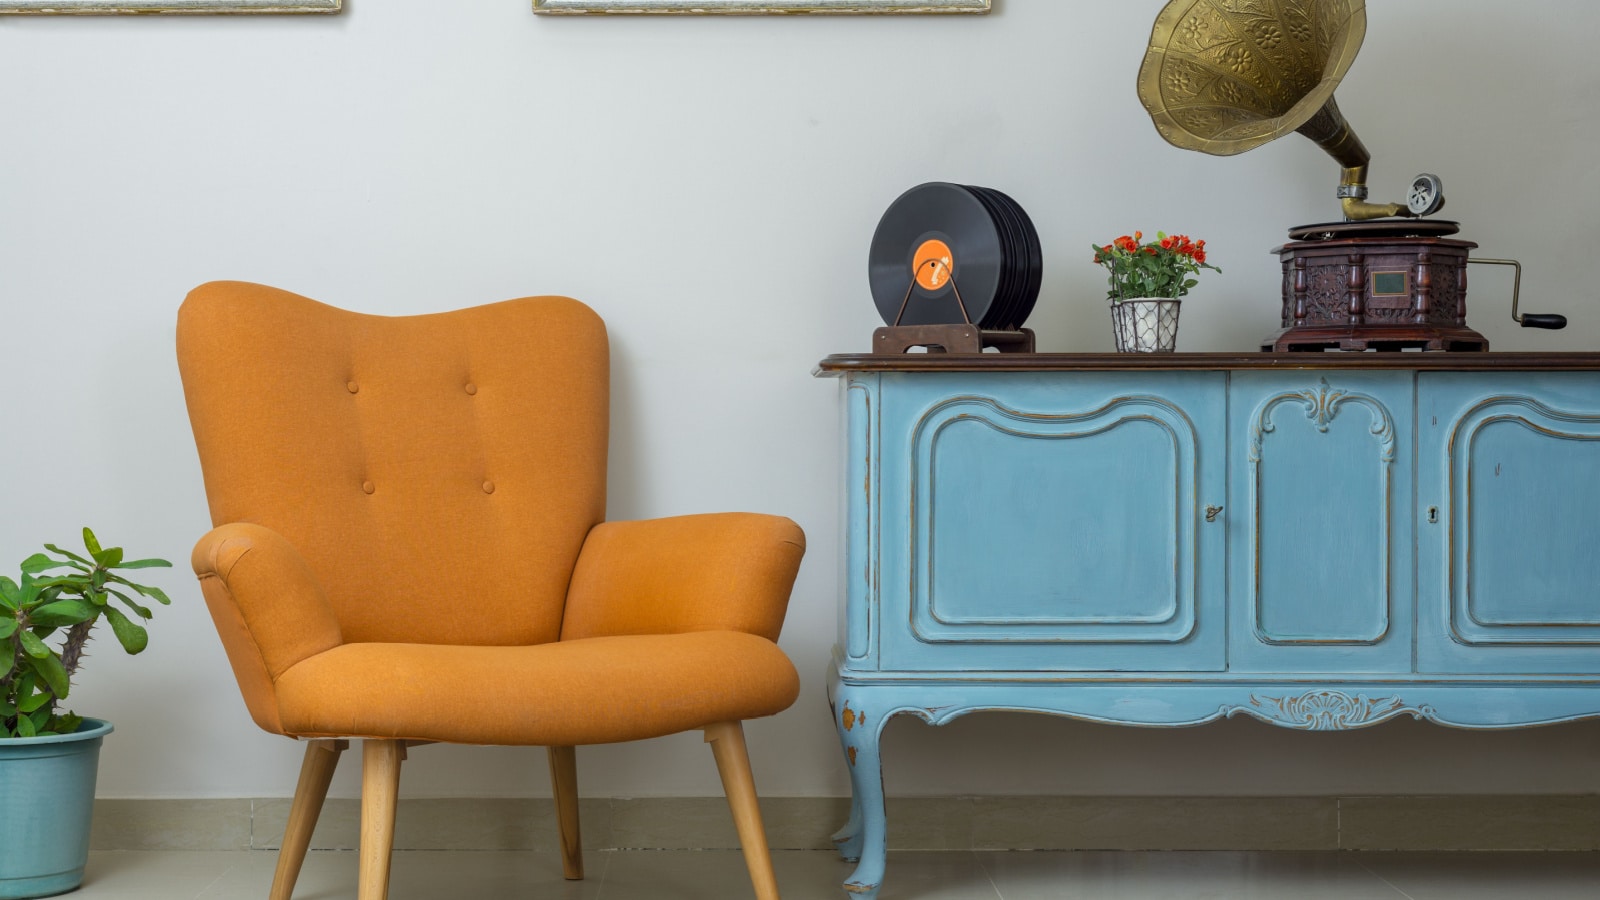 Vintage interior of retro orange armchair, vintage wooden light blue sideboard, old phonograph (gramophone), vinyl records on background of beige wall, tiled porcelain floor, and red carpet